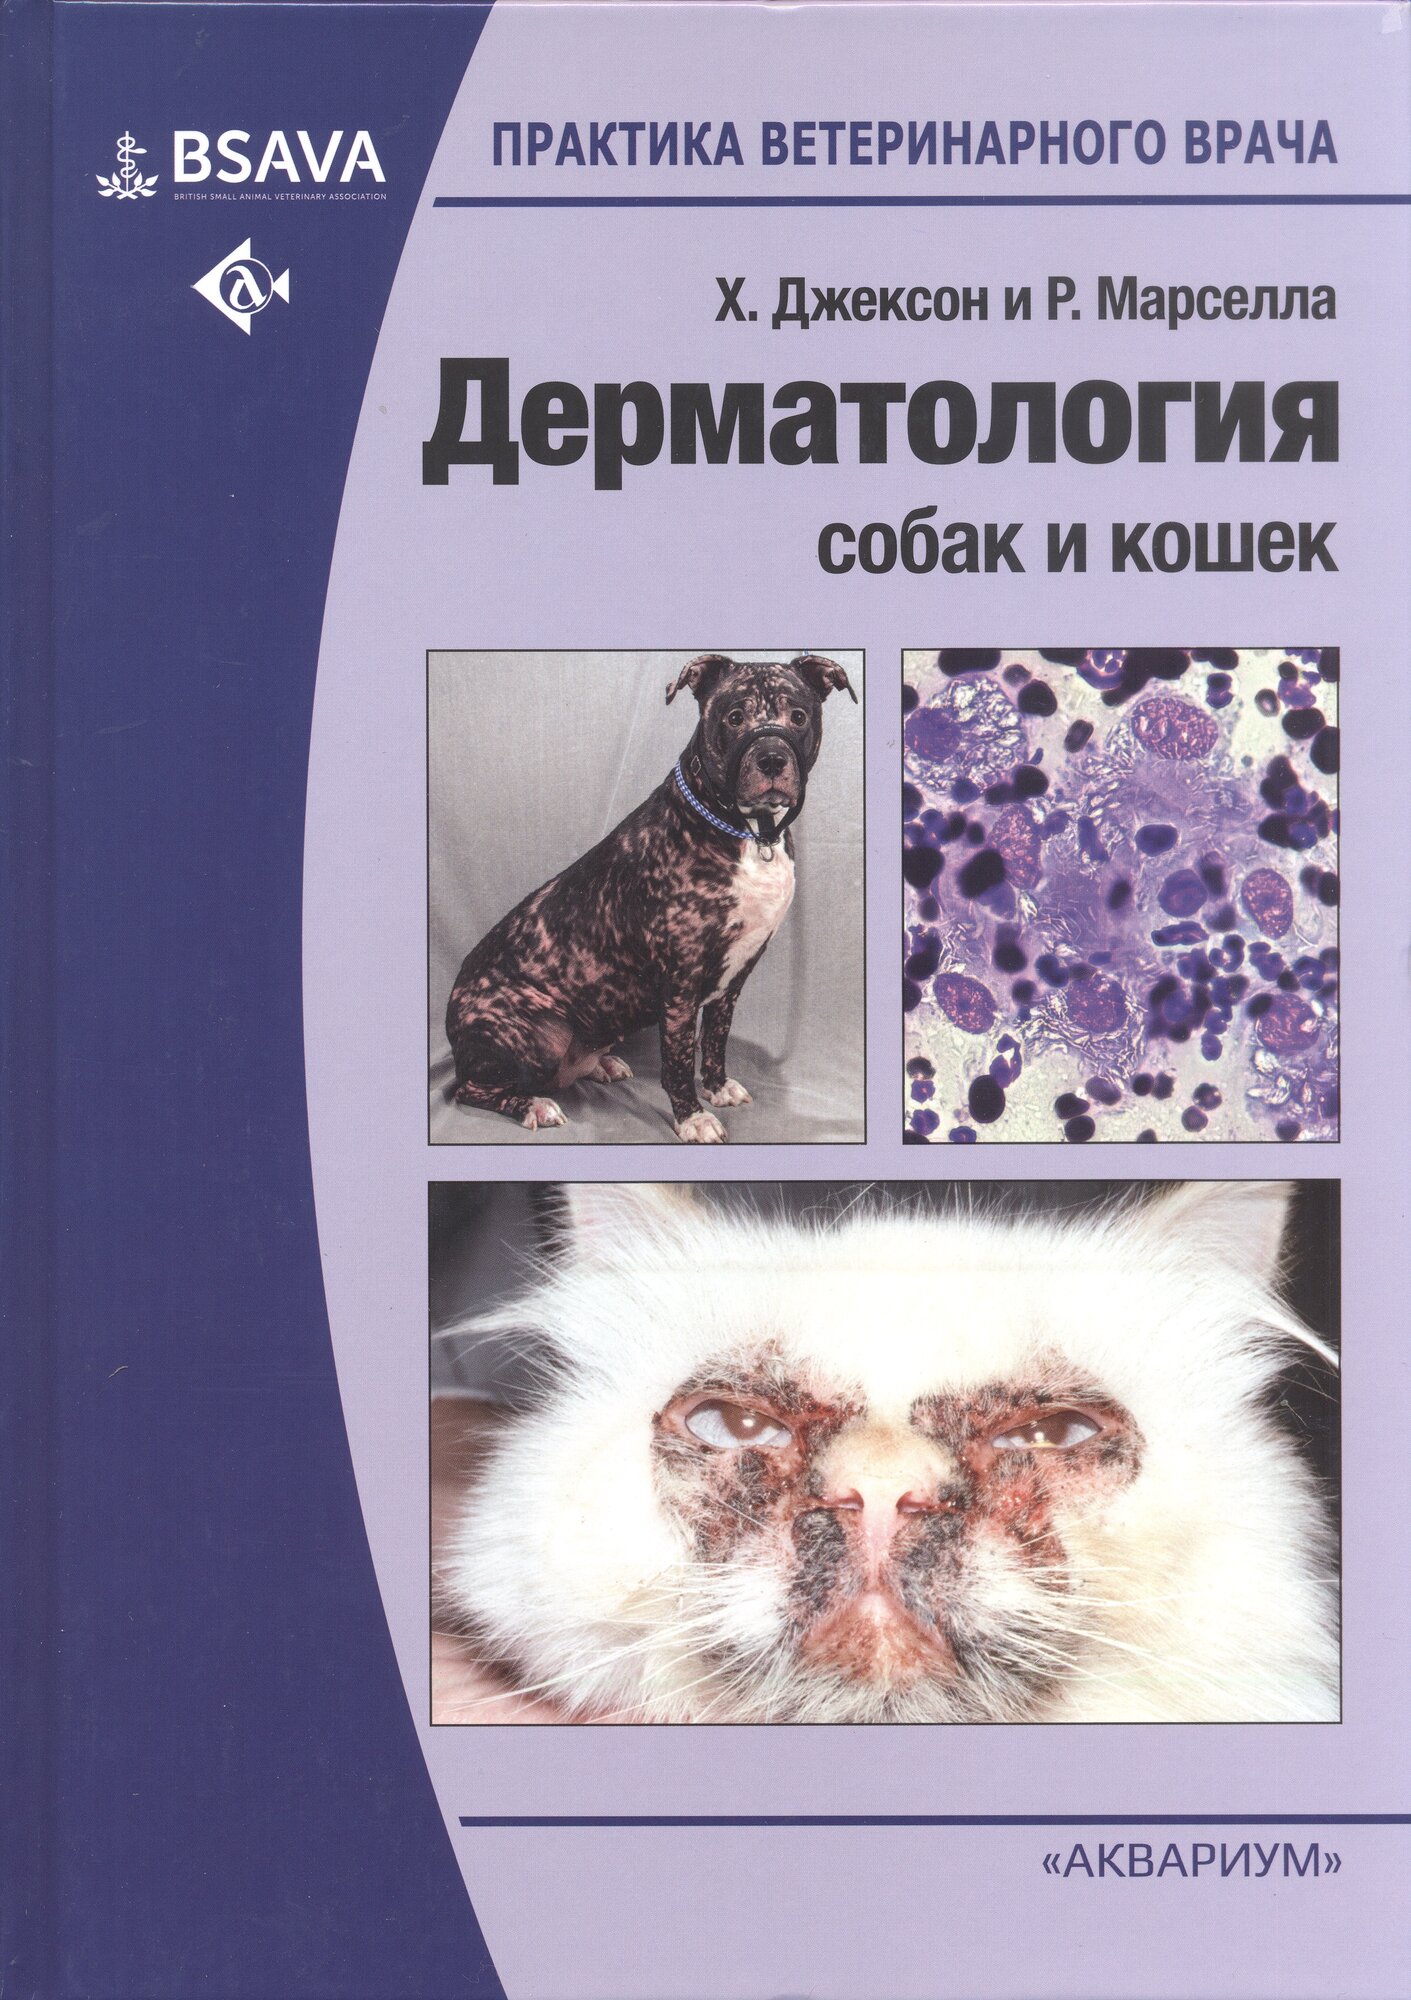 Джексон Х, Марселла Р. "Дерматология собак и кошек"